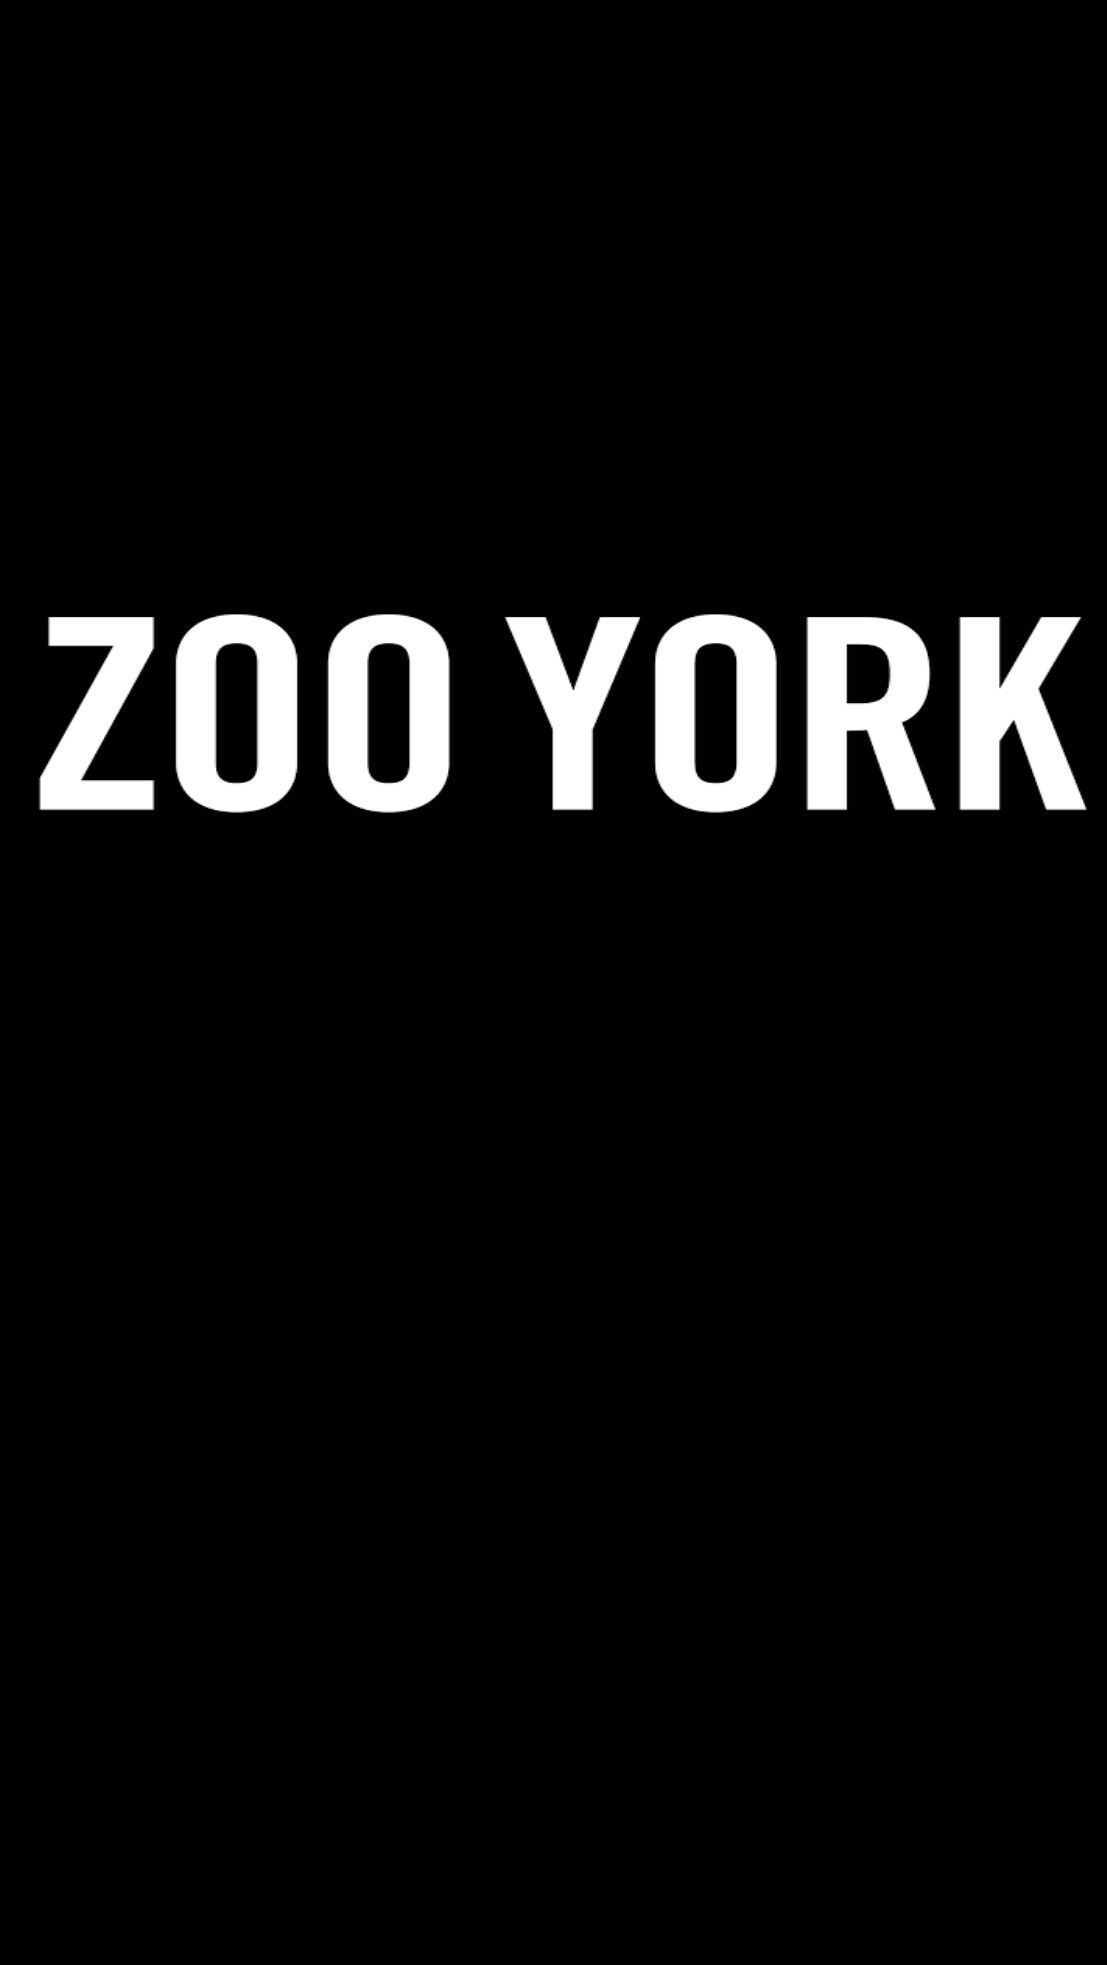 Zoo York Wallpapers